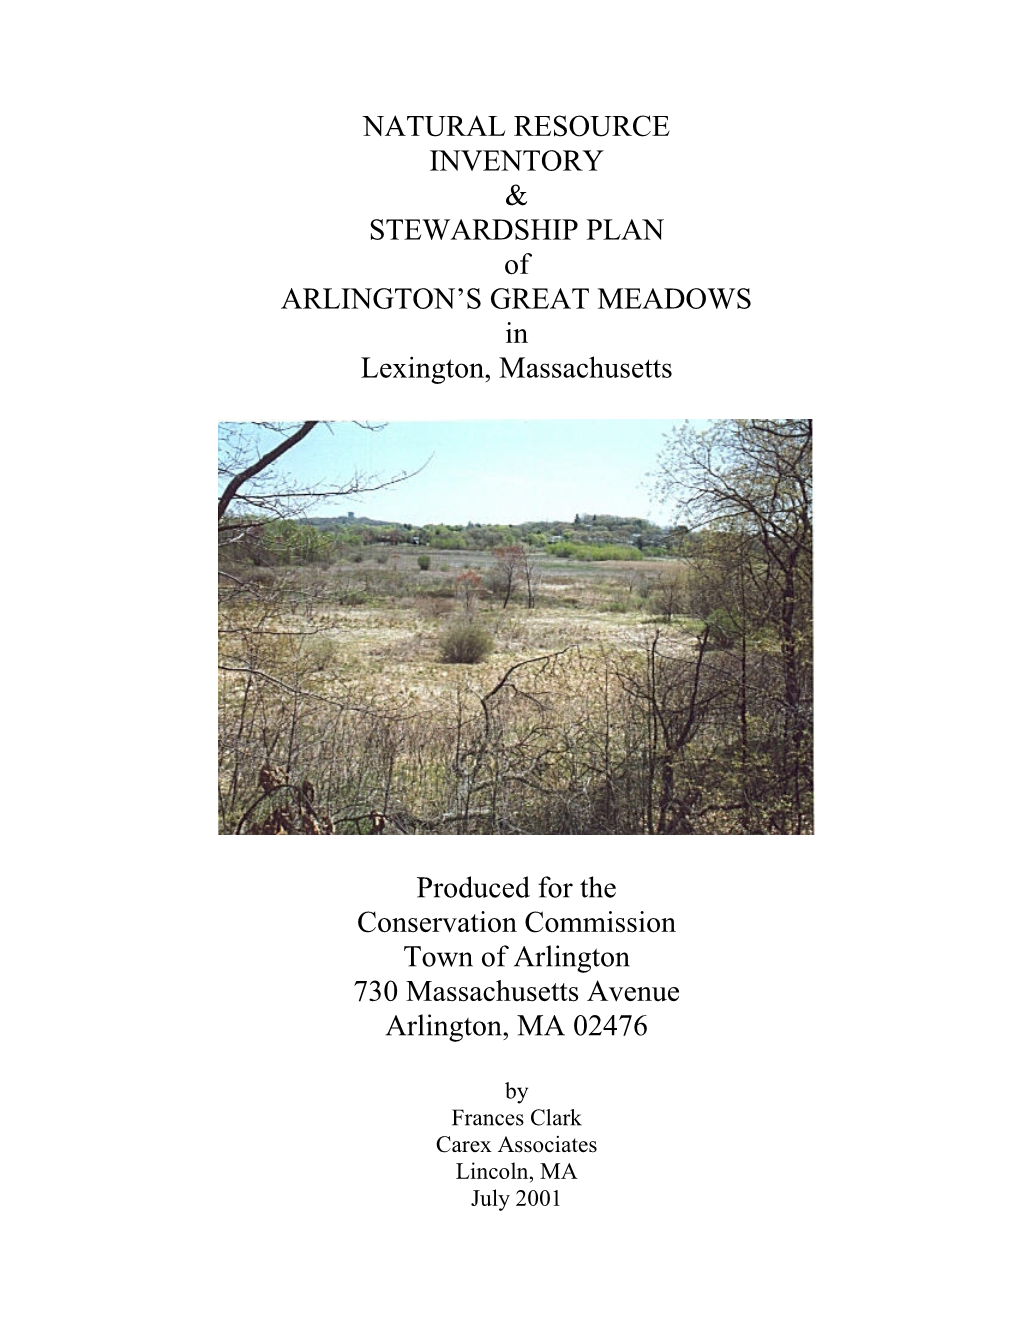 NATURAL RESOURCE INVENTORY & STEWARDSHIP PLAN of ARLINGTON’S GREAT MEADOWS in Lexington, Massachusetts